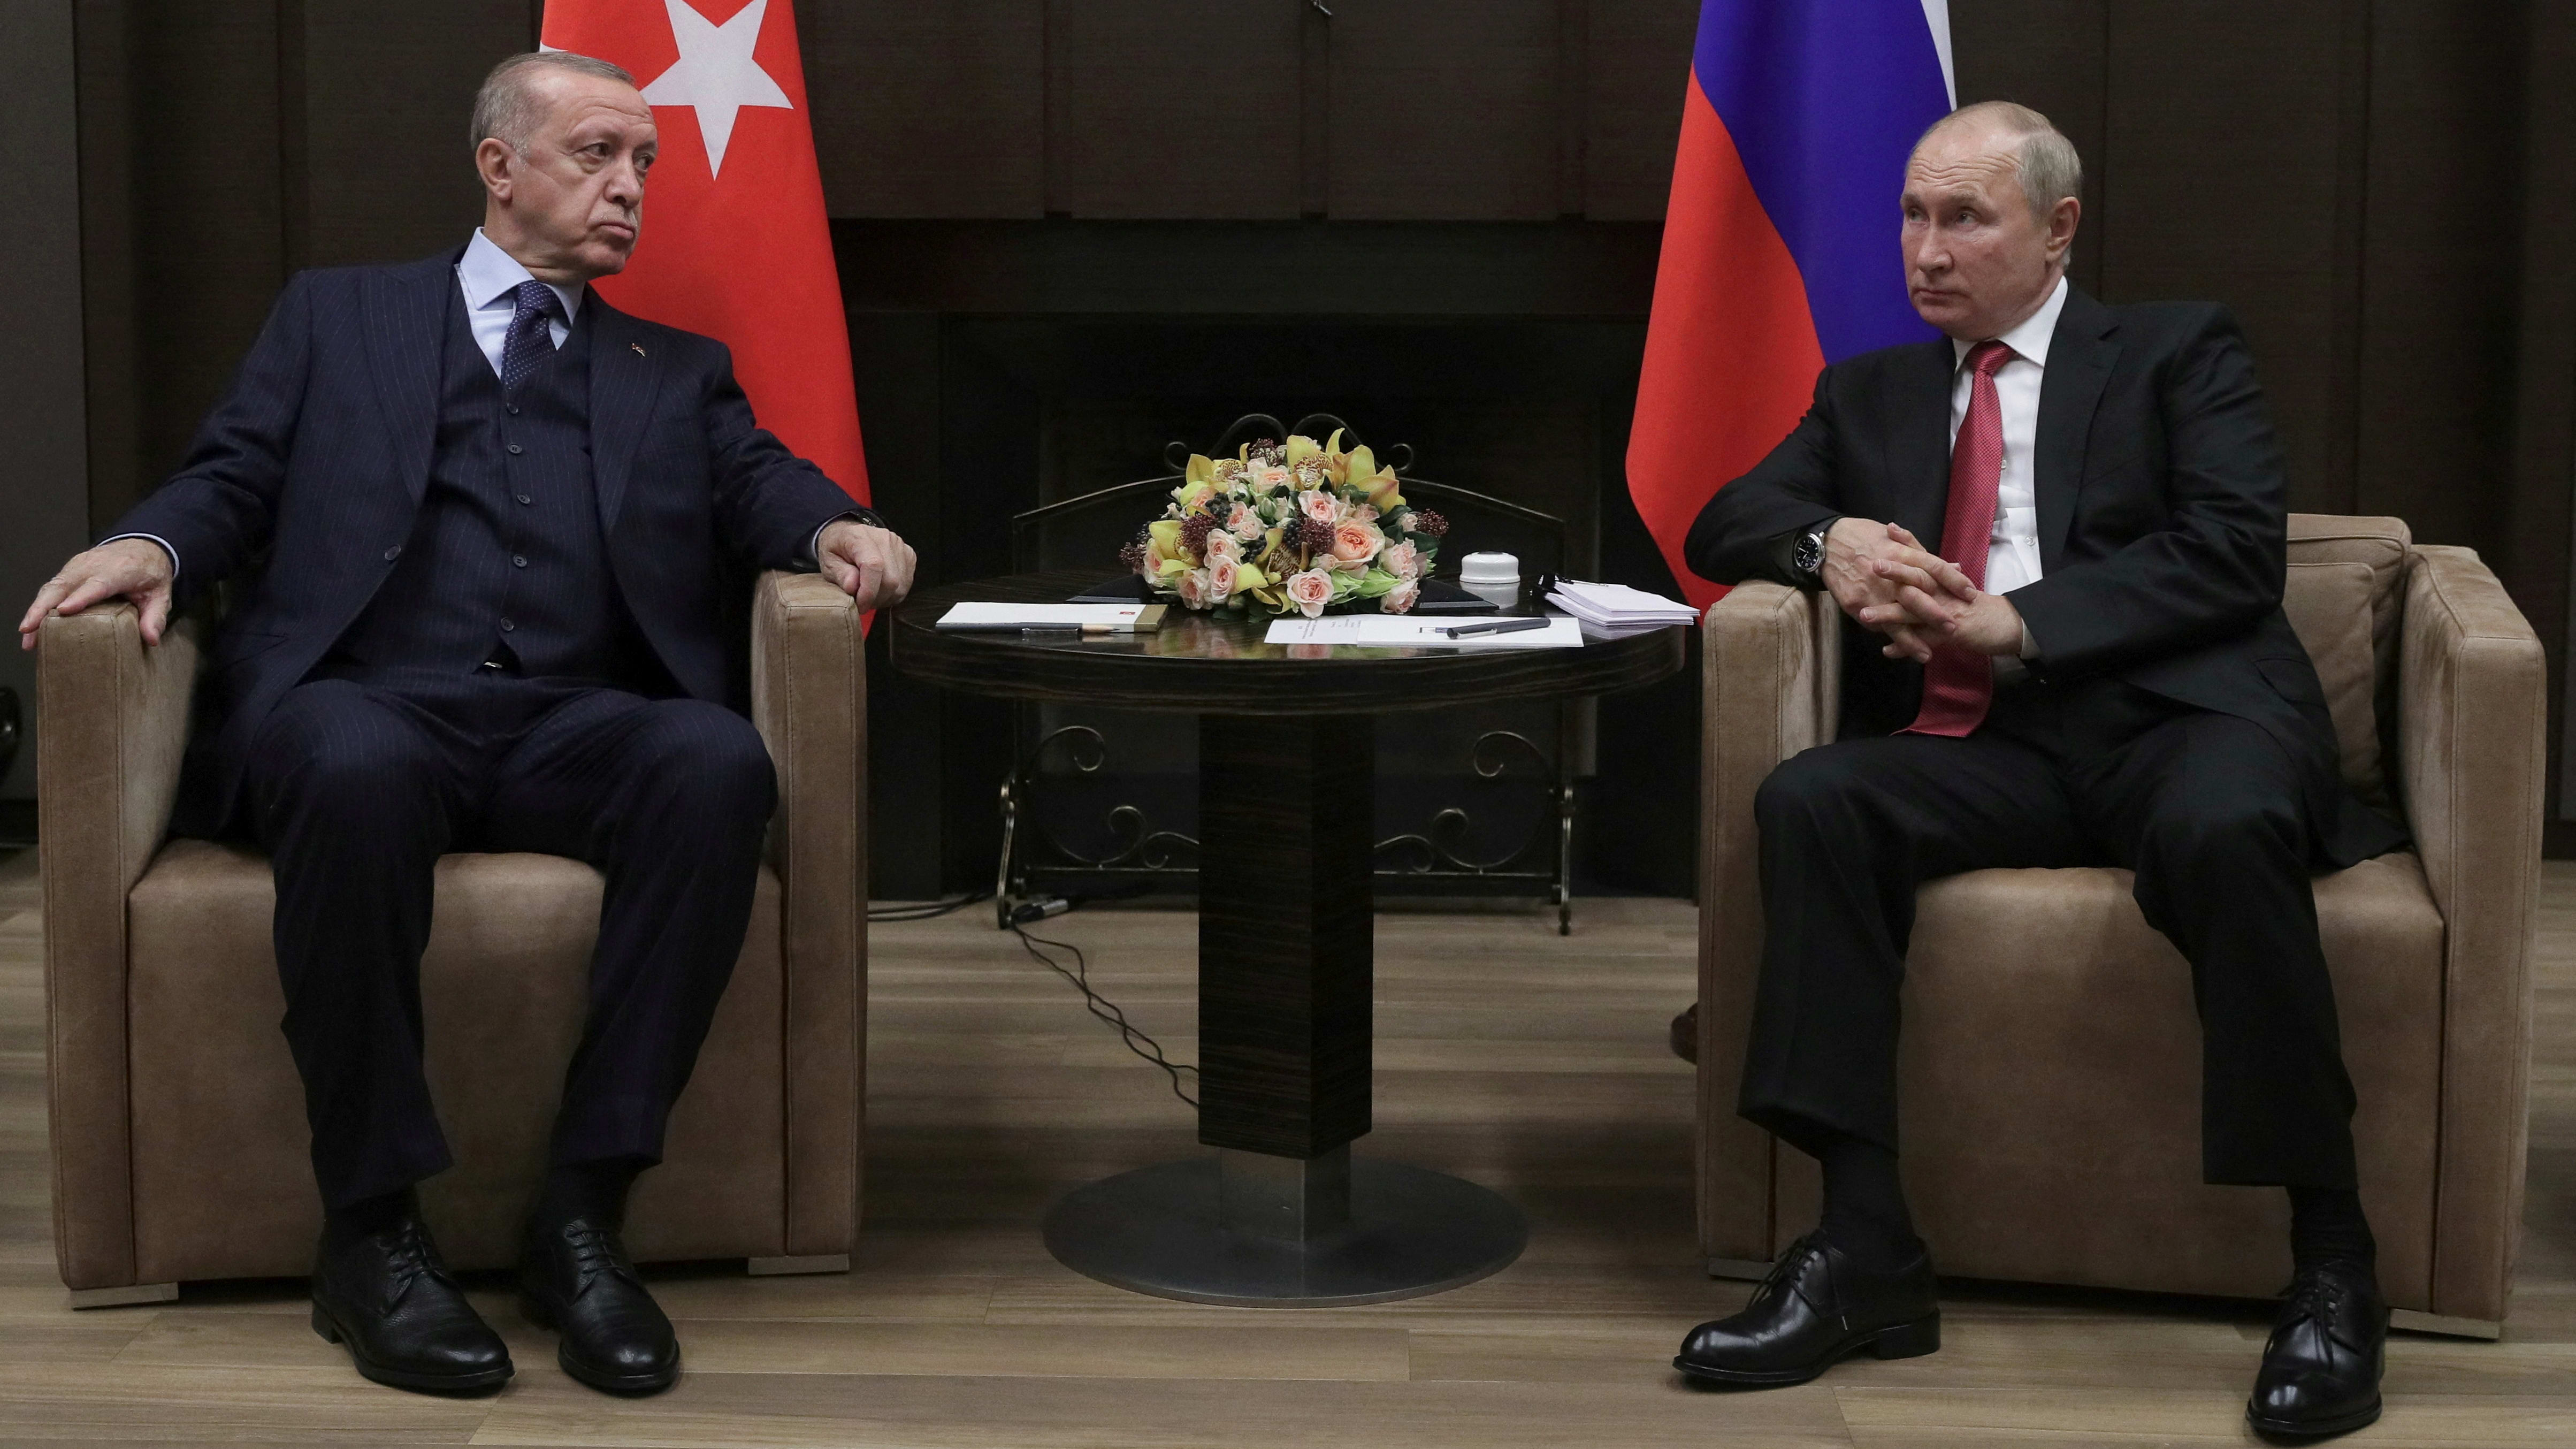 Russian President Vladimir Putin with Turkish President Recep Tayyip Erdogan.